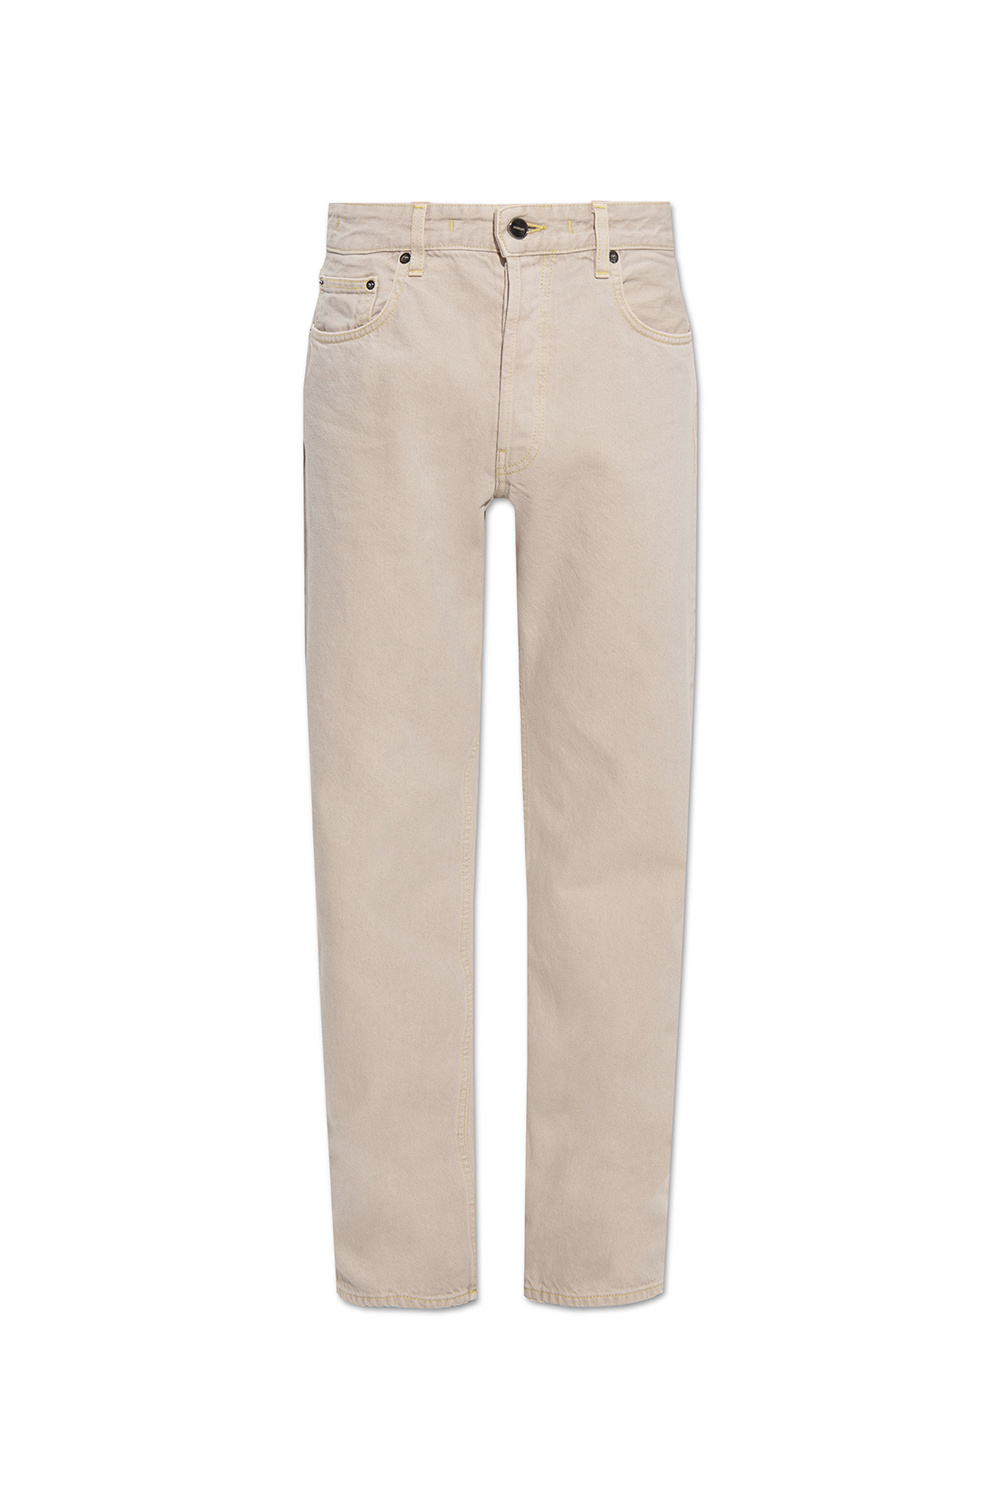 StarpixlShops Slovakia - 'Fresa' jeans from organic cotton Jacquemus - ASOS 4505  Petite colour block legging